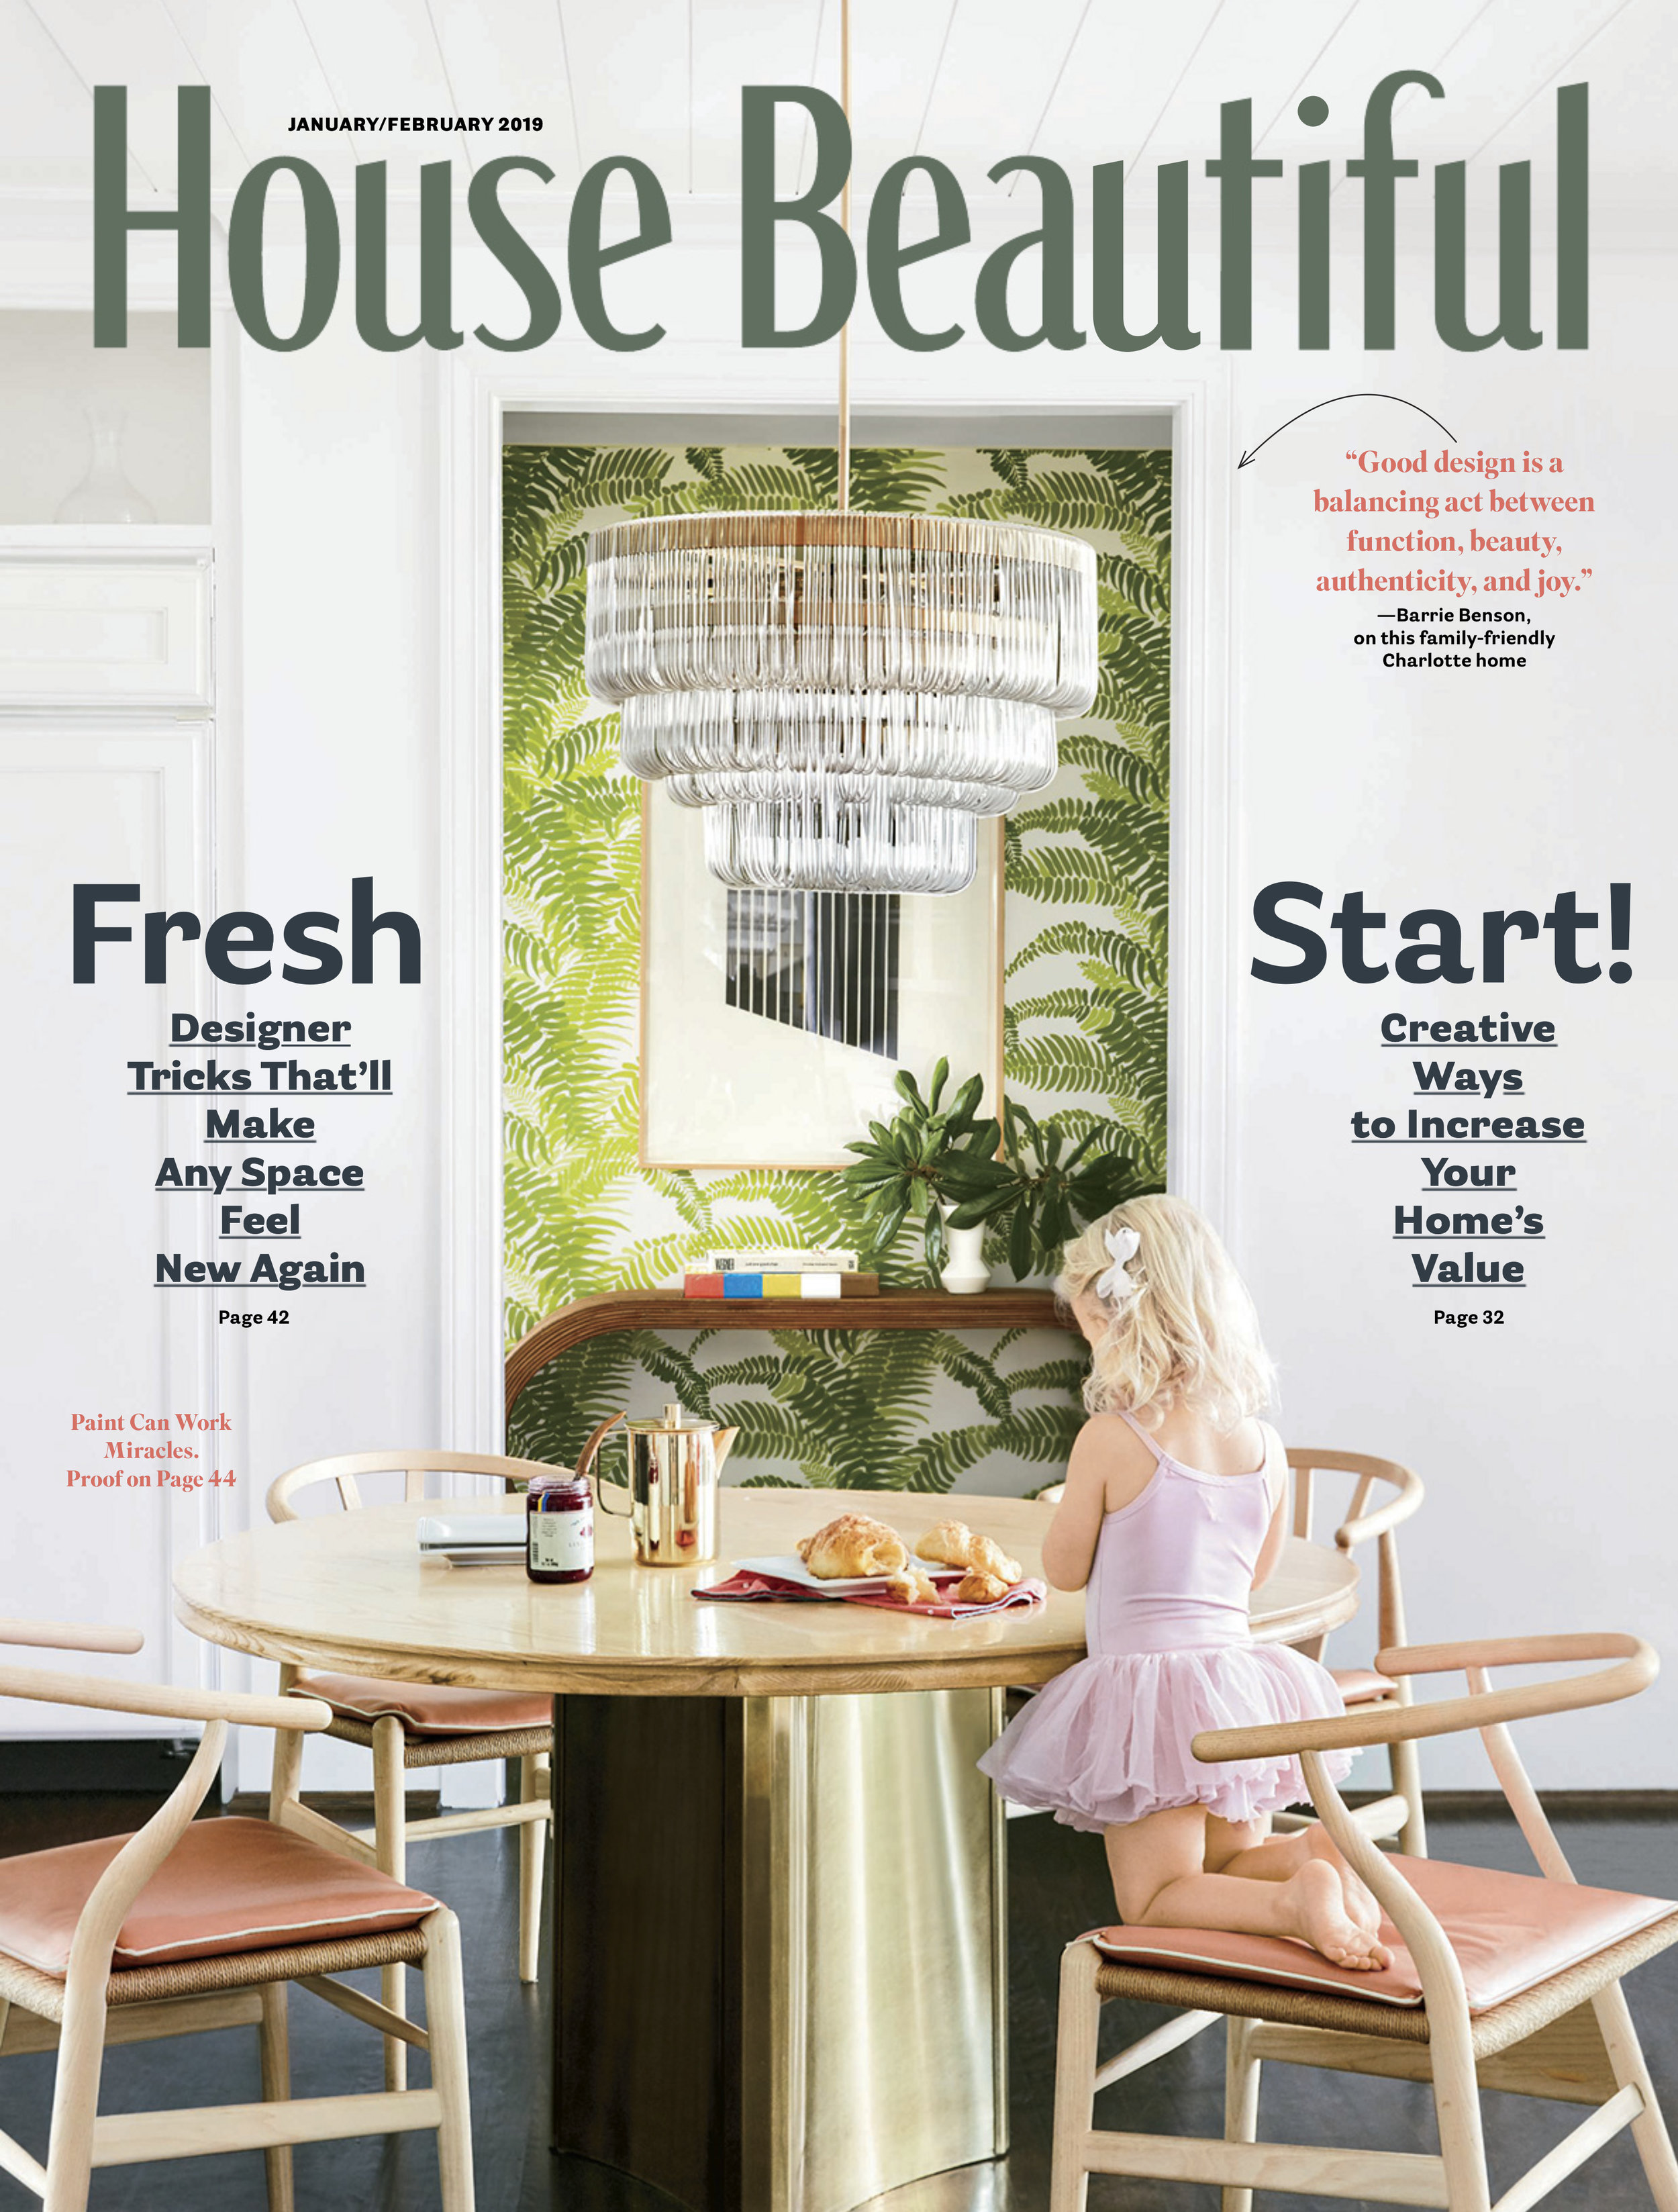 House Beautiful January/February 2019 cover featuring Meg Braff Designs Wallpaper